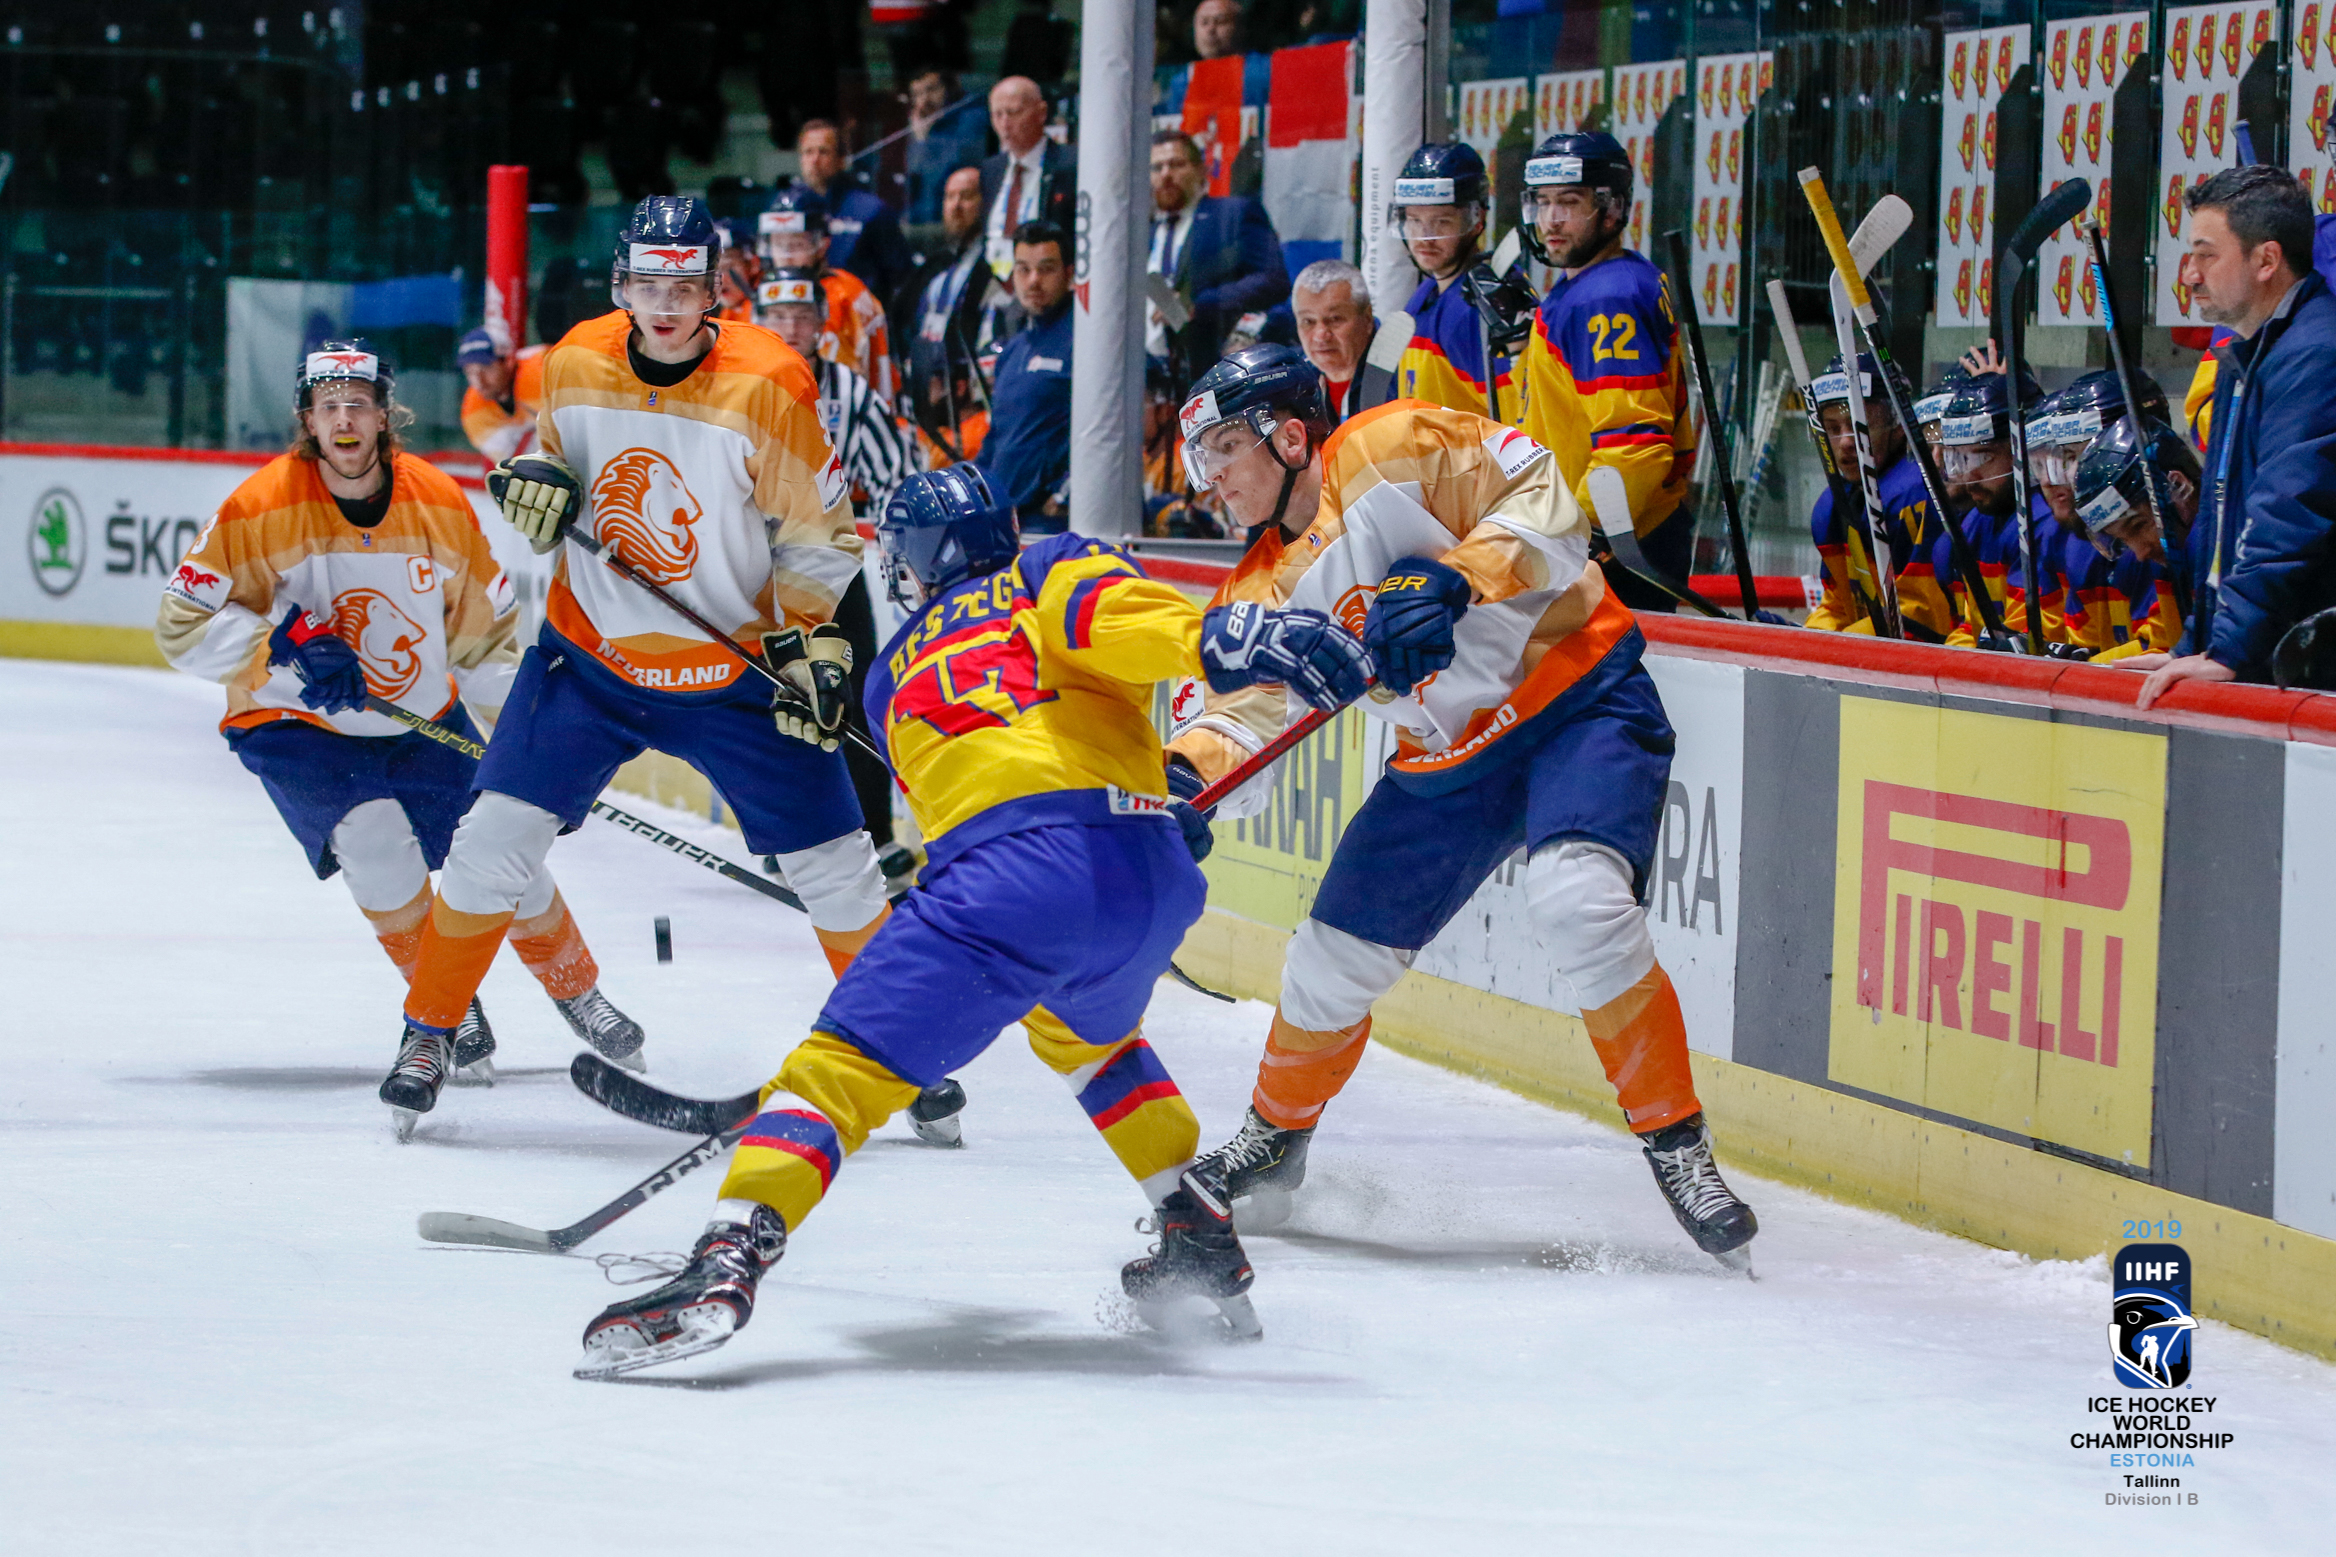 IIHF - Gallery: Japan vs. Romania - 2019 IIHF Ice Hockey World